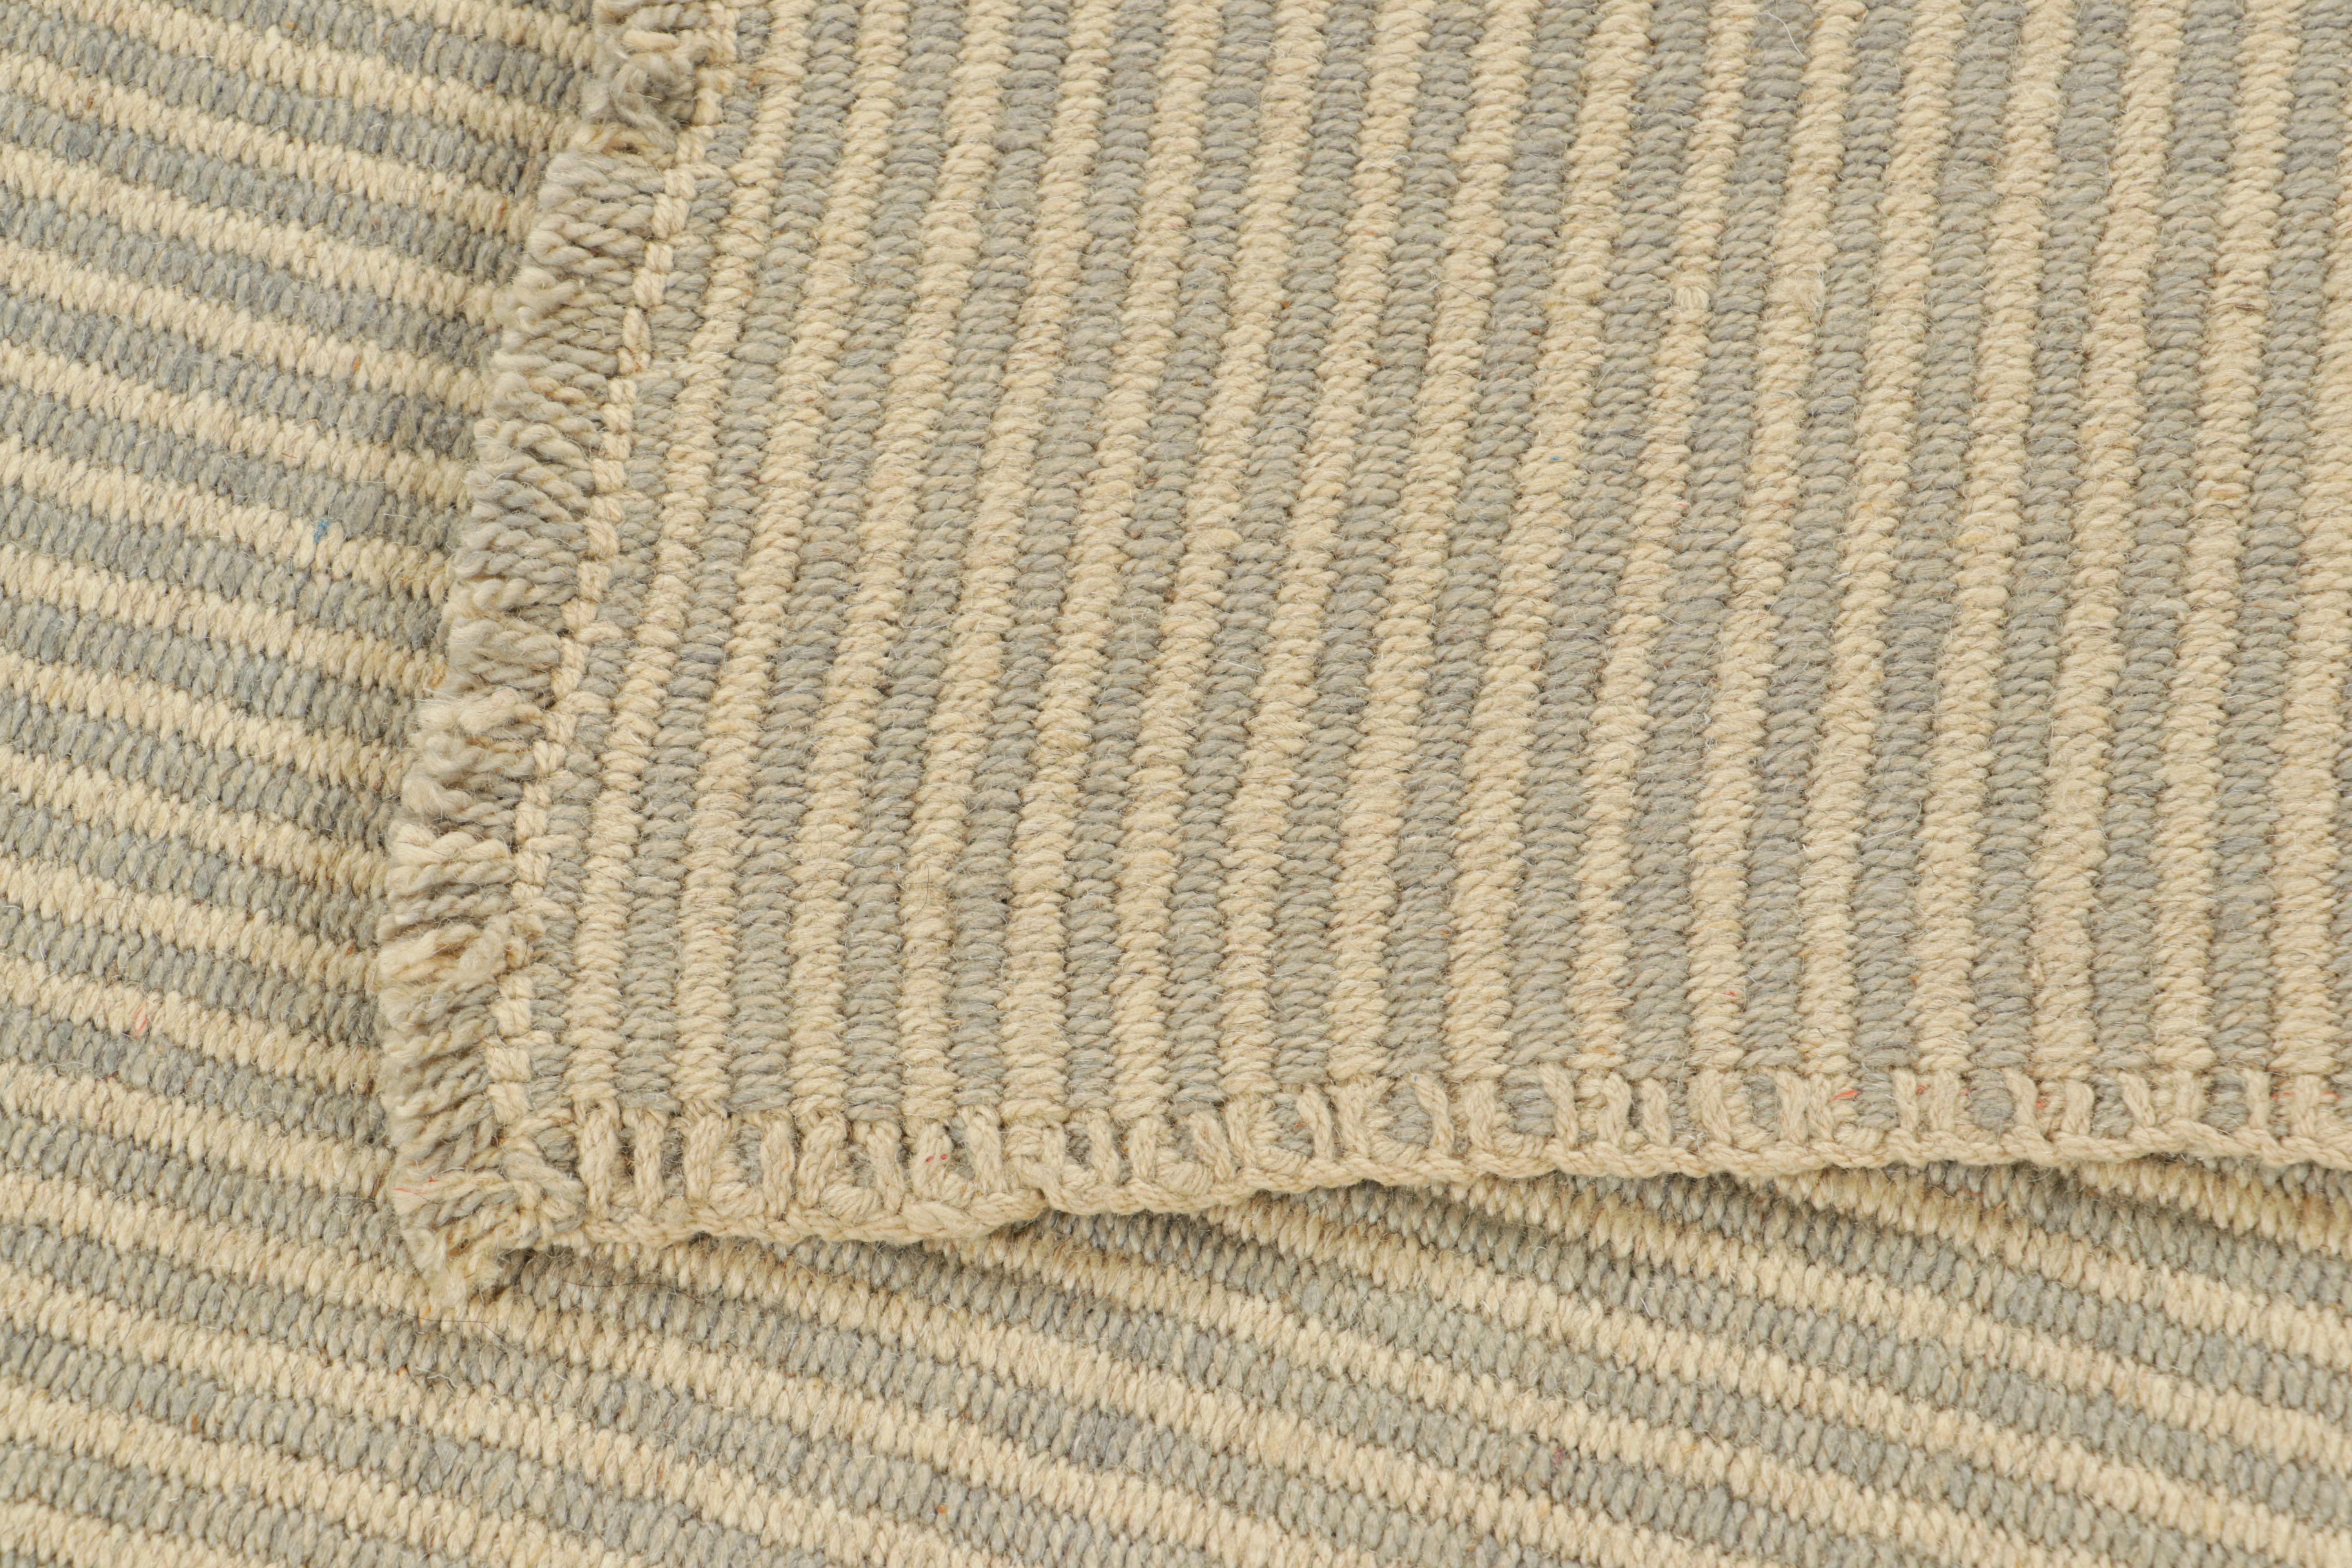 XXIe siècle et contemporain Rug & Kilim's Contemporary Kilim in Beige-Brown Textural Stripes (Kilim contemporain à rayures texturées beige et marron) en vente